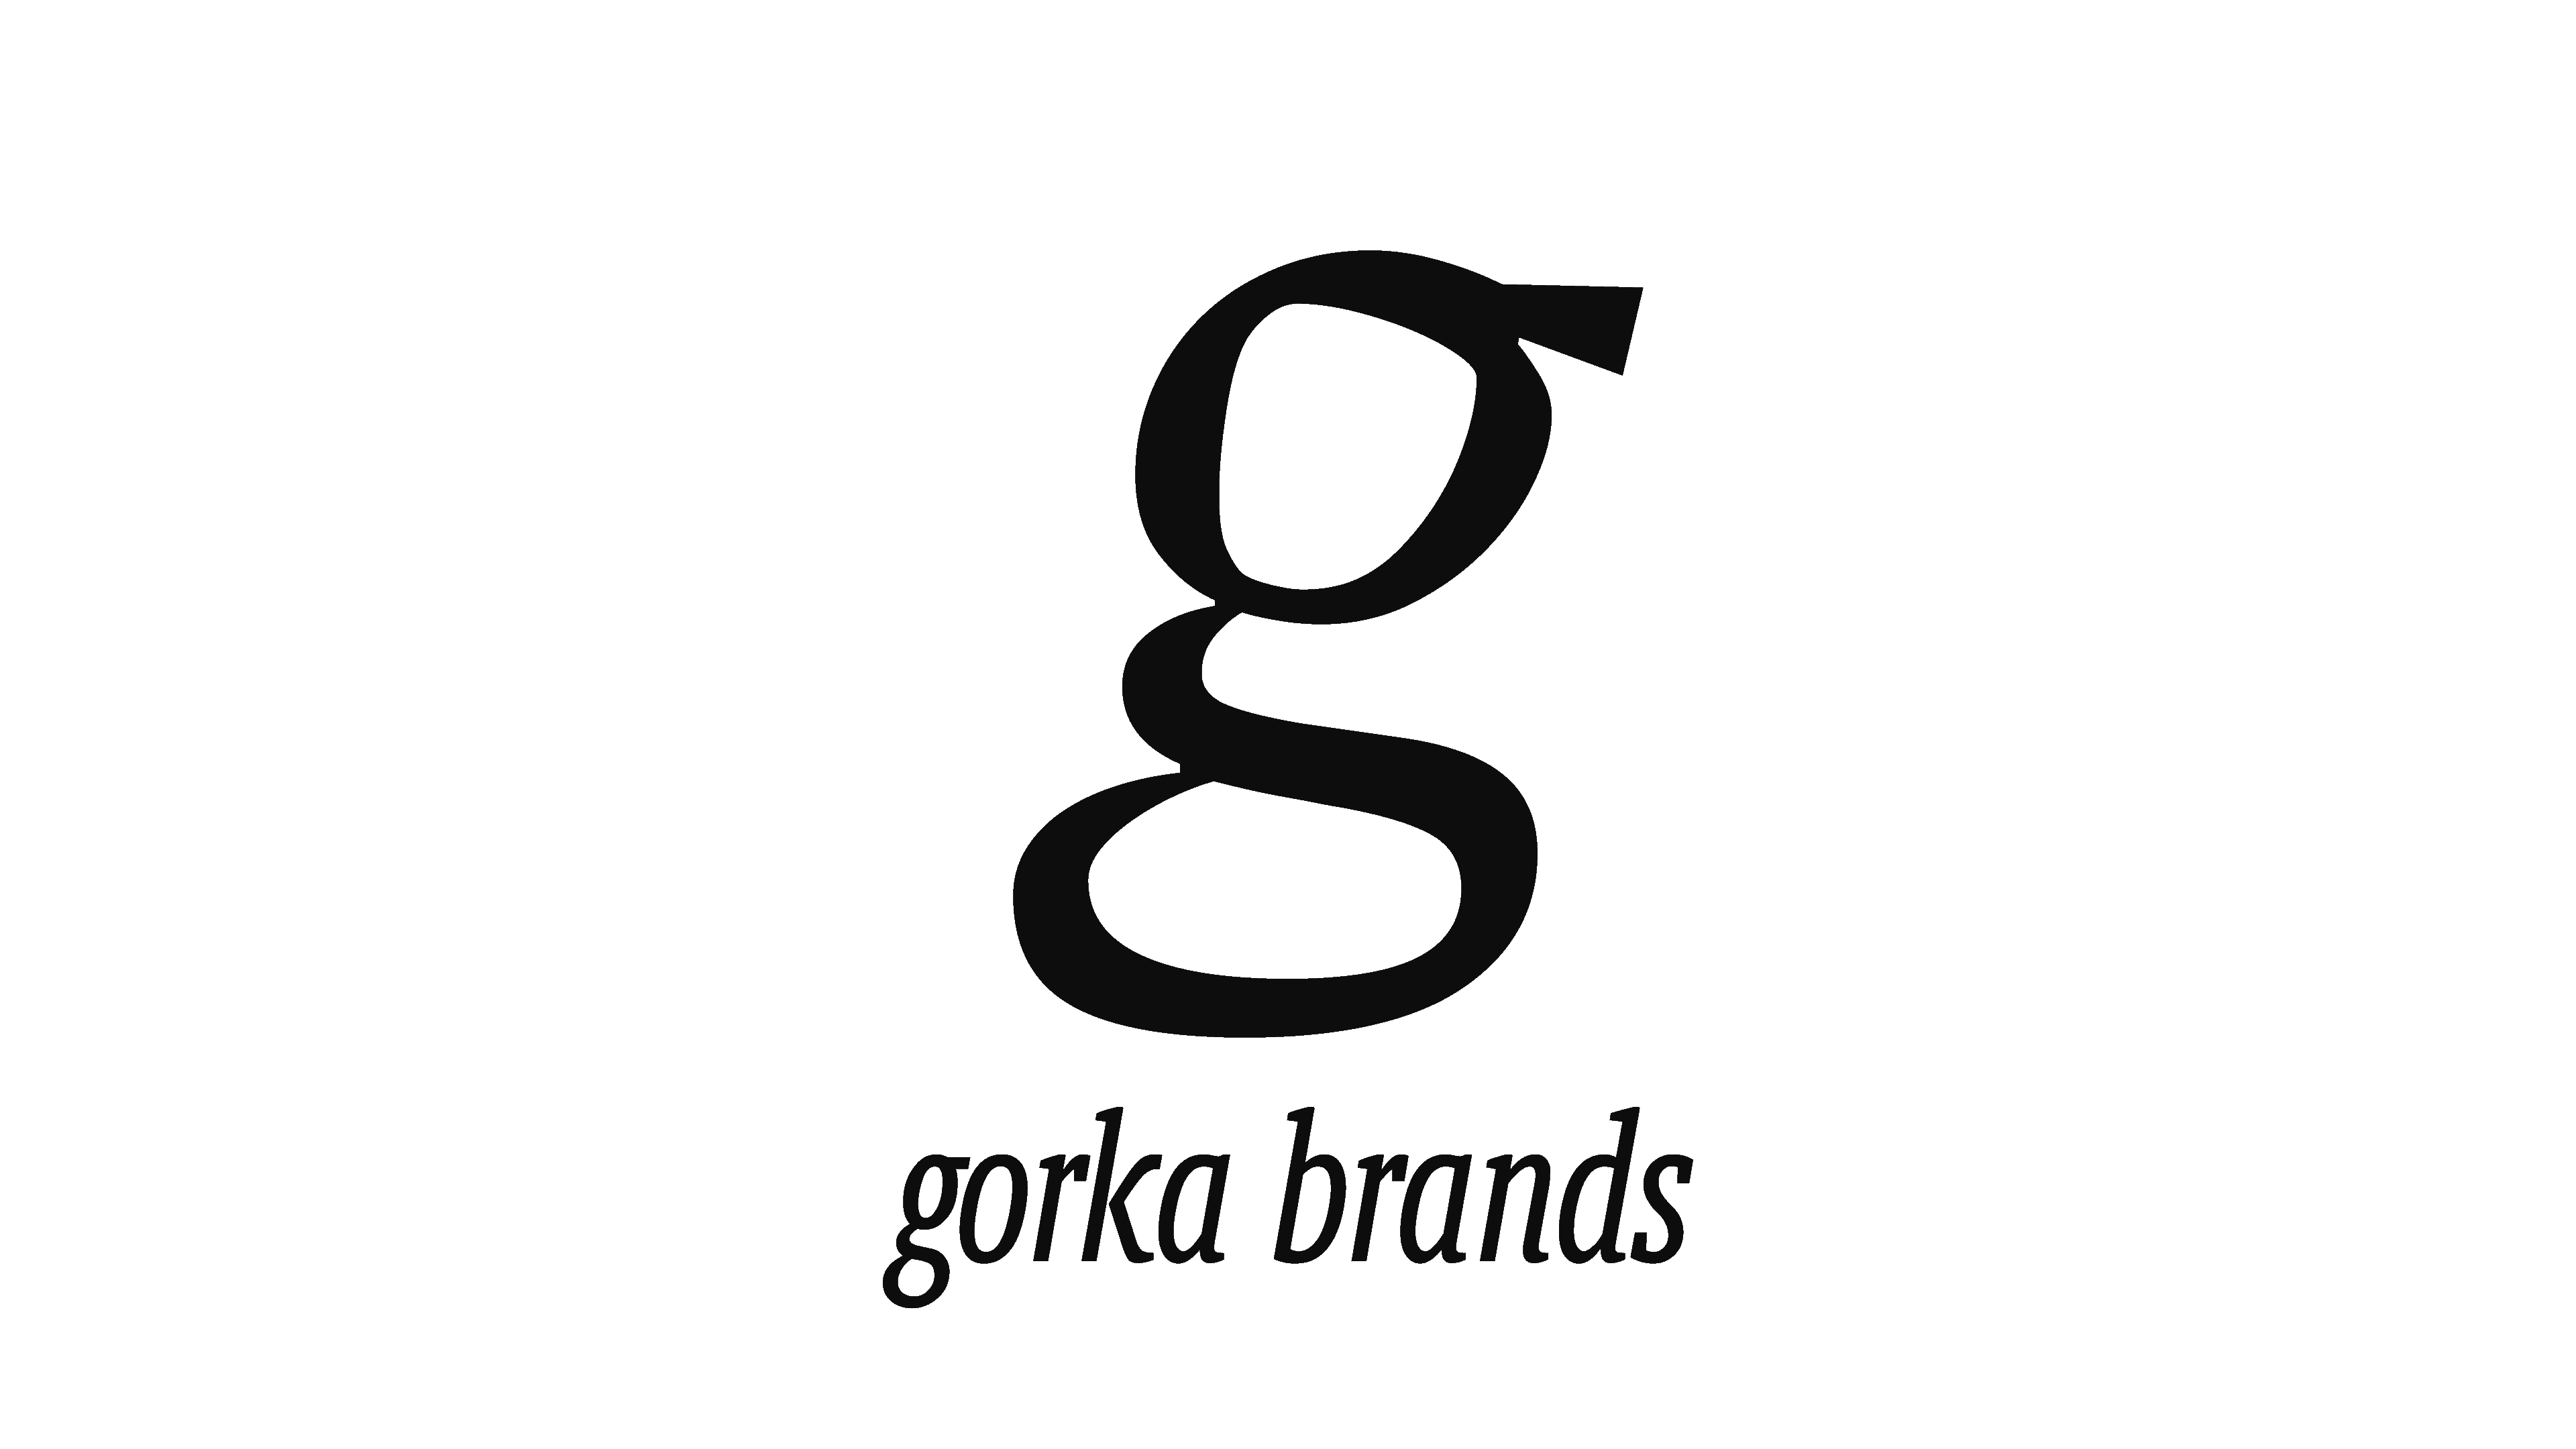 gorka brands logo